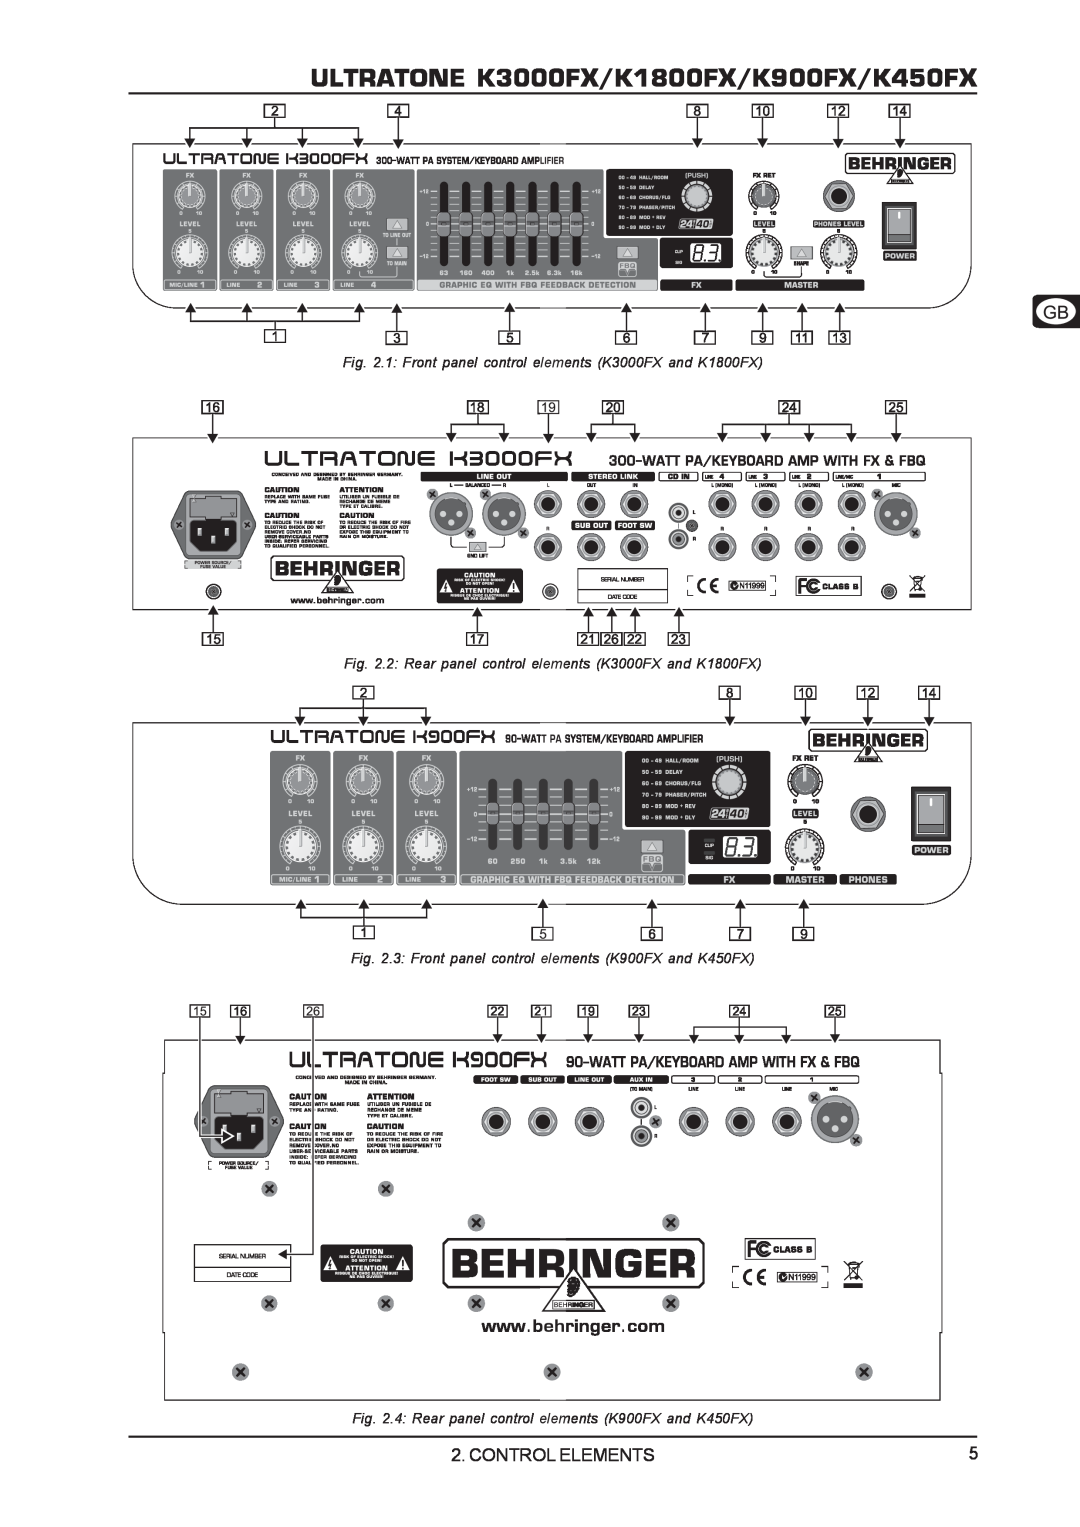 Behringer user manual ULTRATONE K3000FX/K1800FX/K900FX/K450FX, Control Elements 